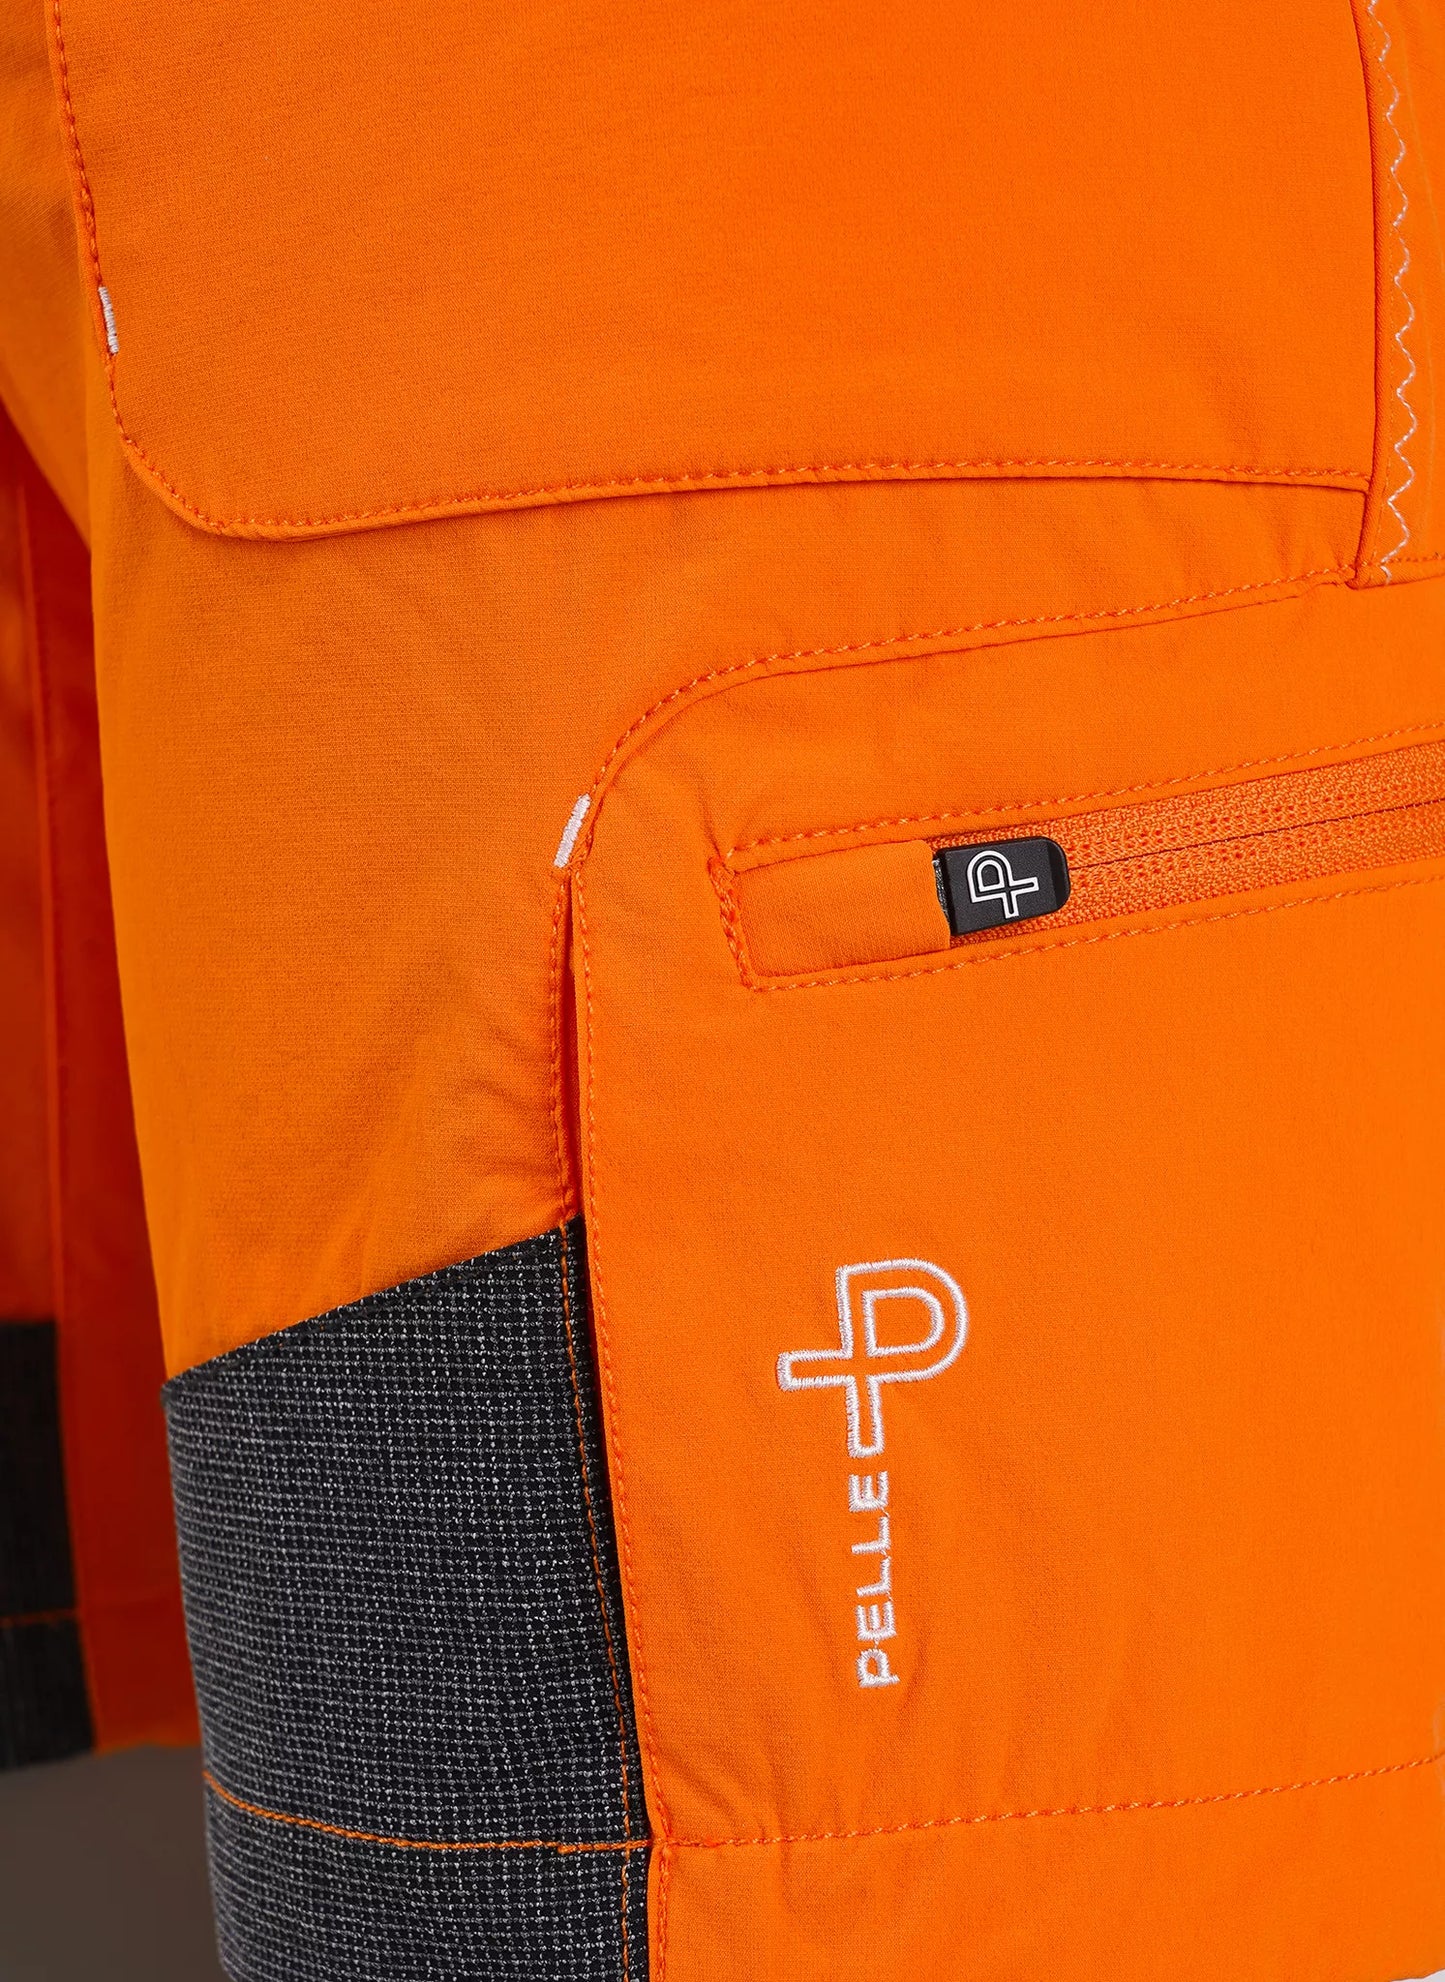 Pelle P 1200 Shorts -  Blazing Orange